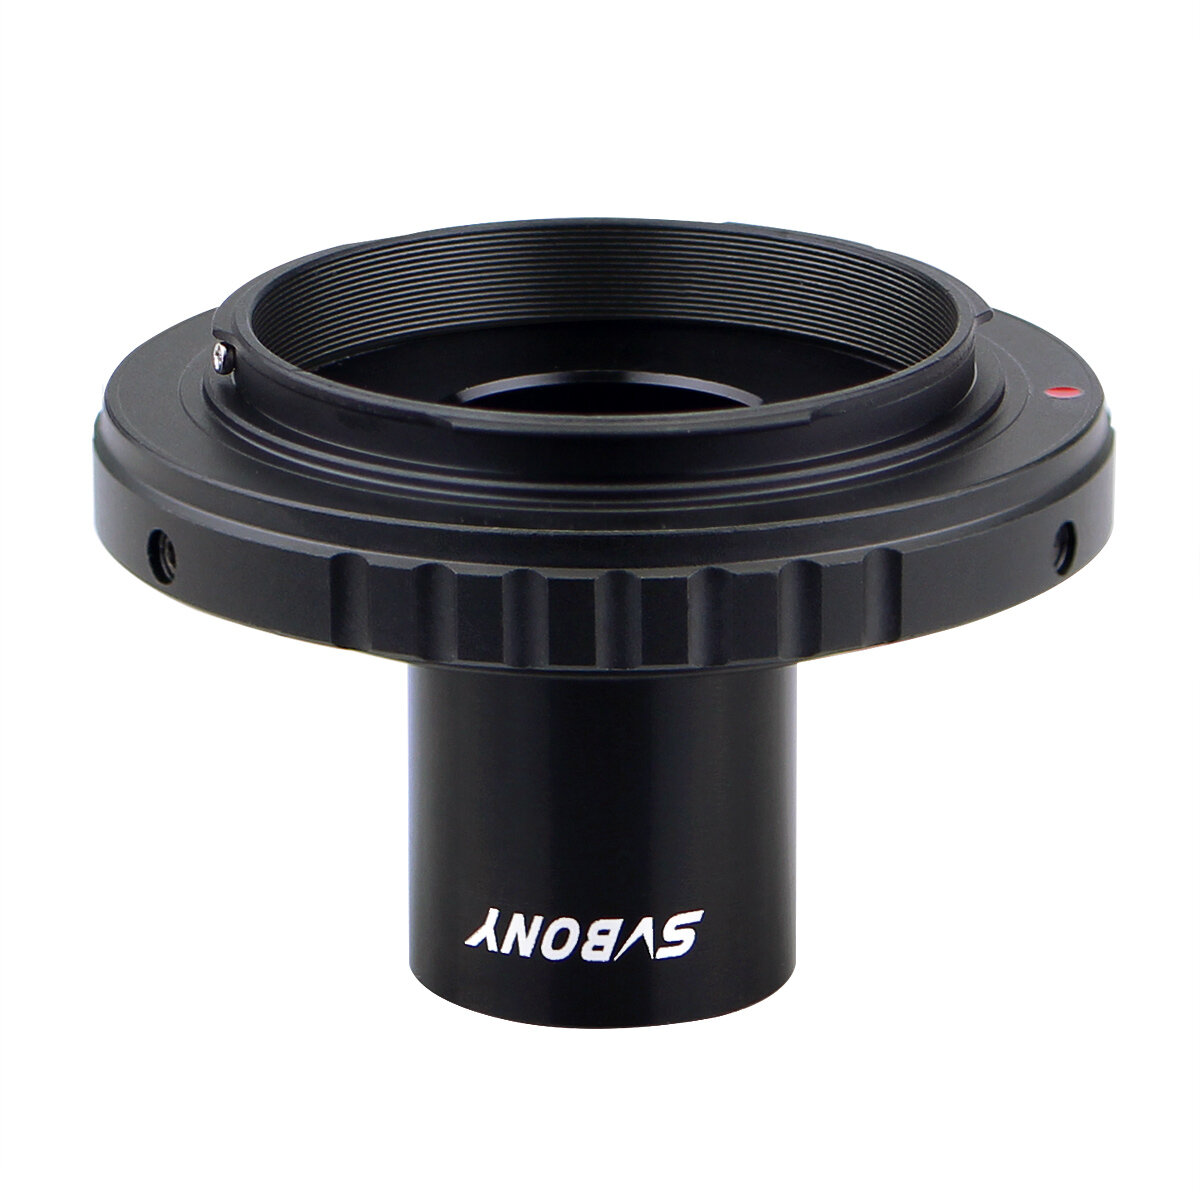 

SVBONY TOP Microscope T Adapter Camera Adapter+T2 Ring for Nikon DSLR/SLR Lens Adapter